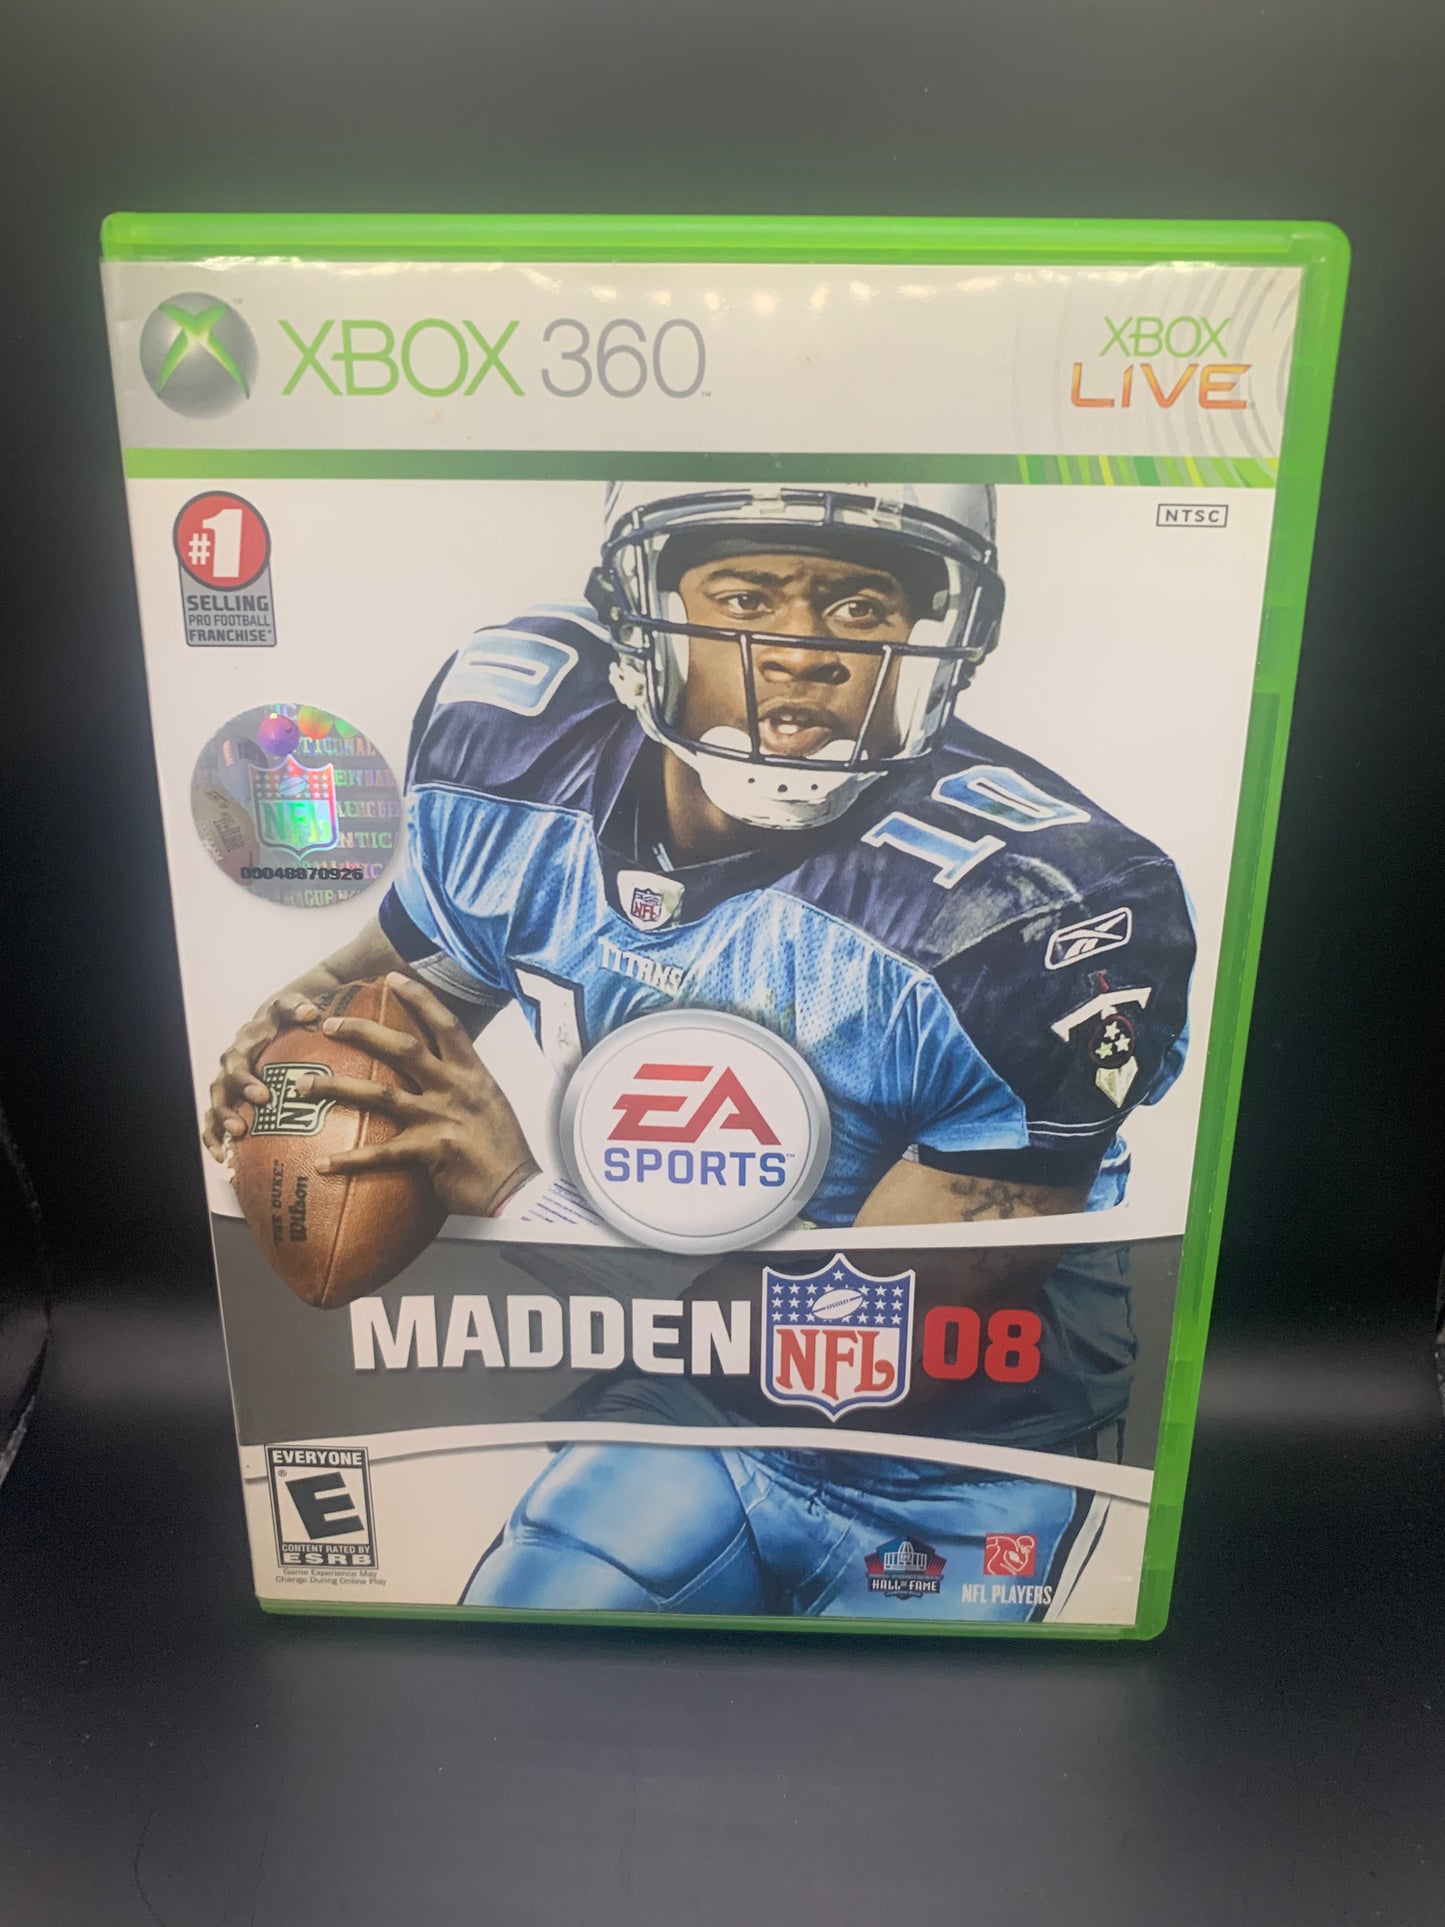 XBOX 360 - Madden NFL 08